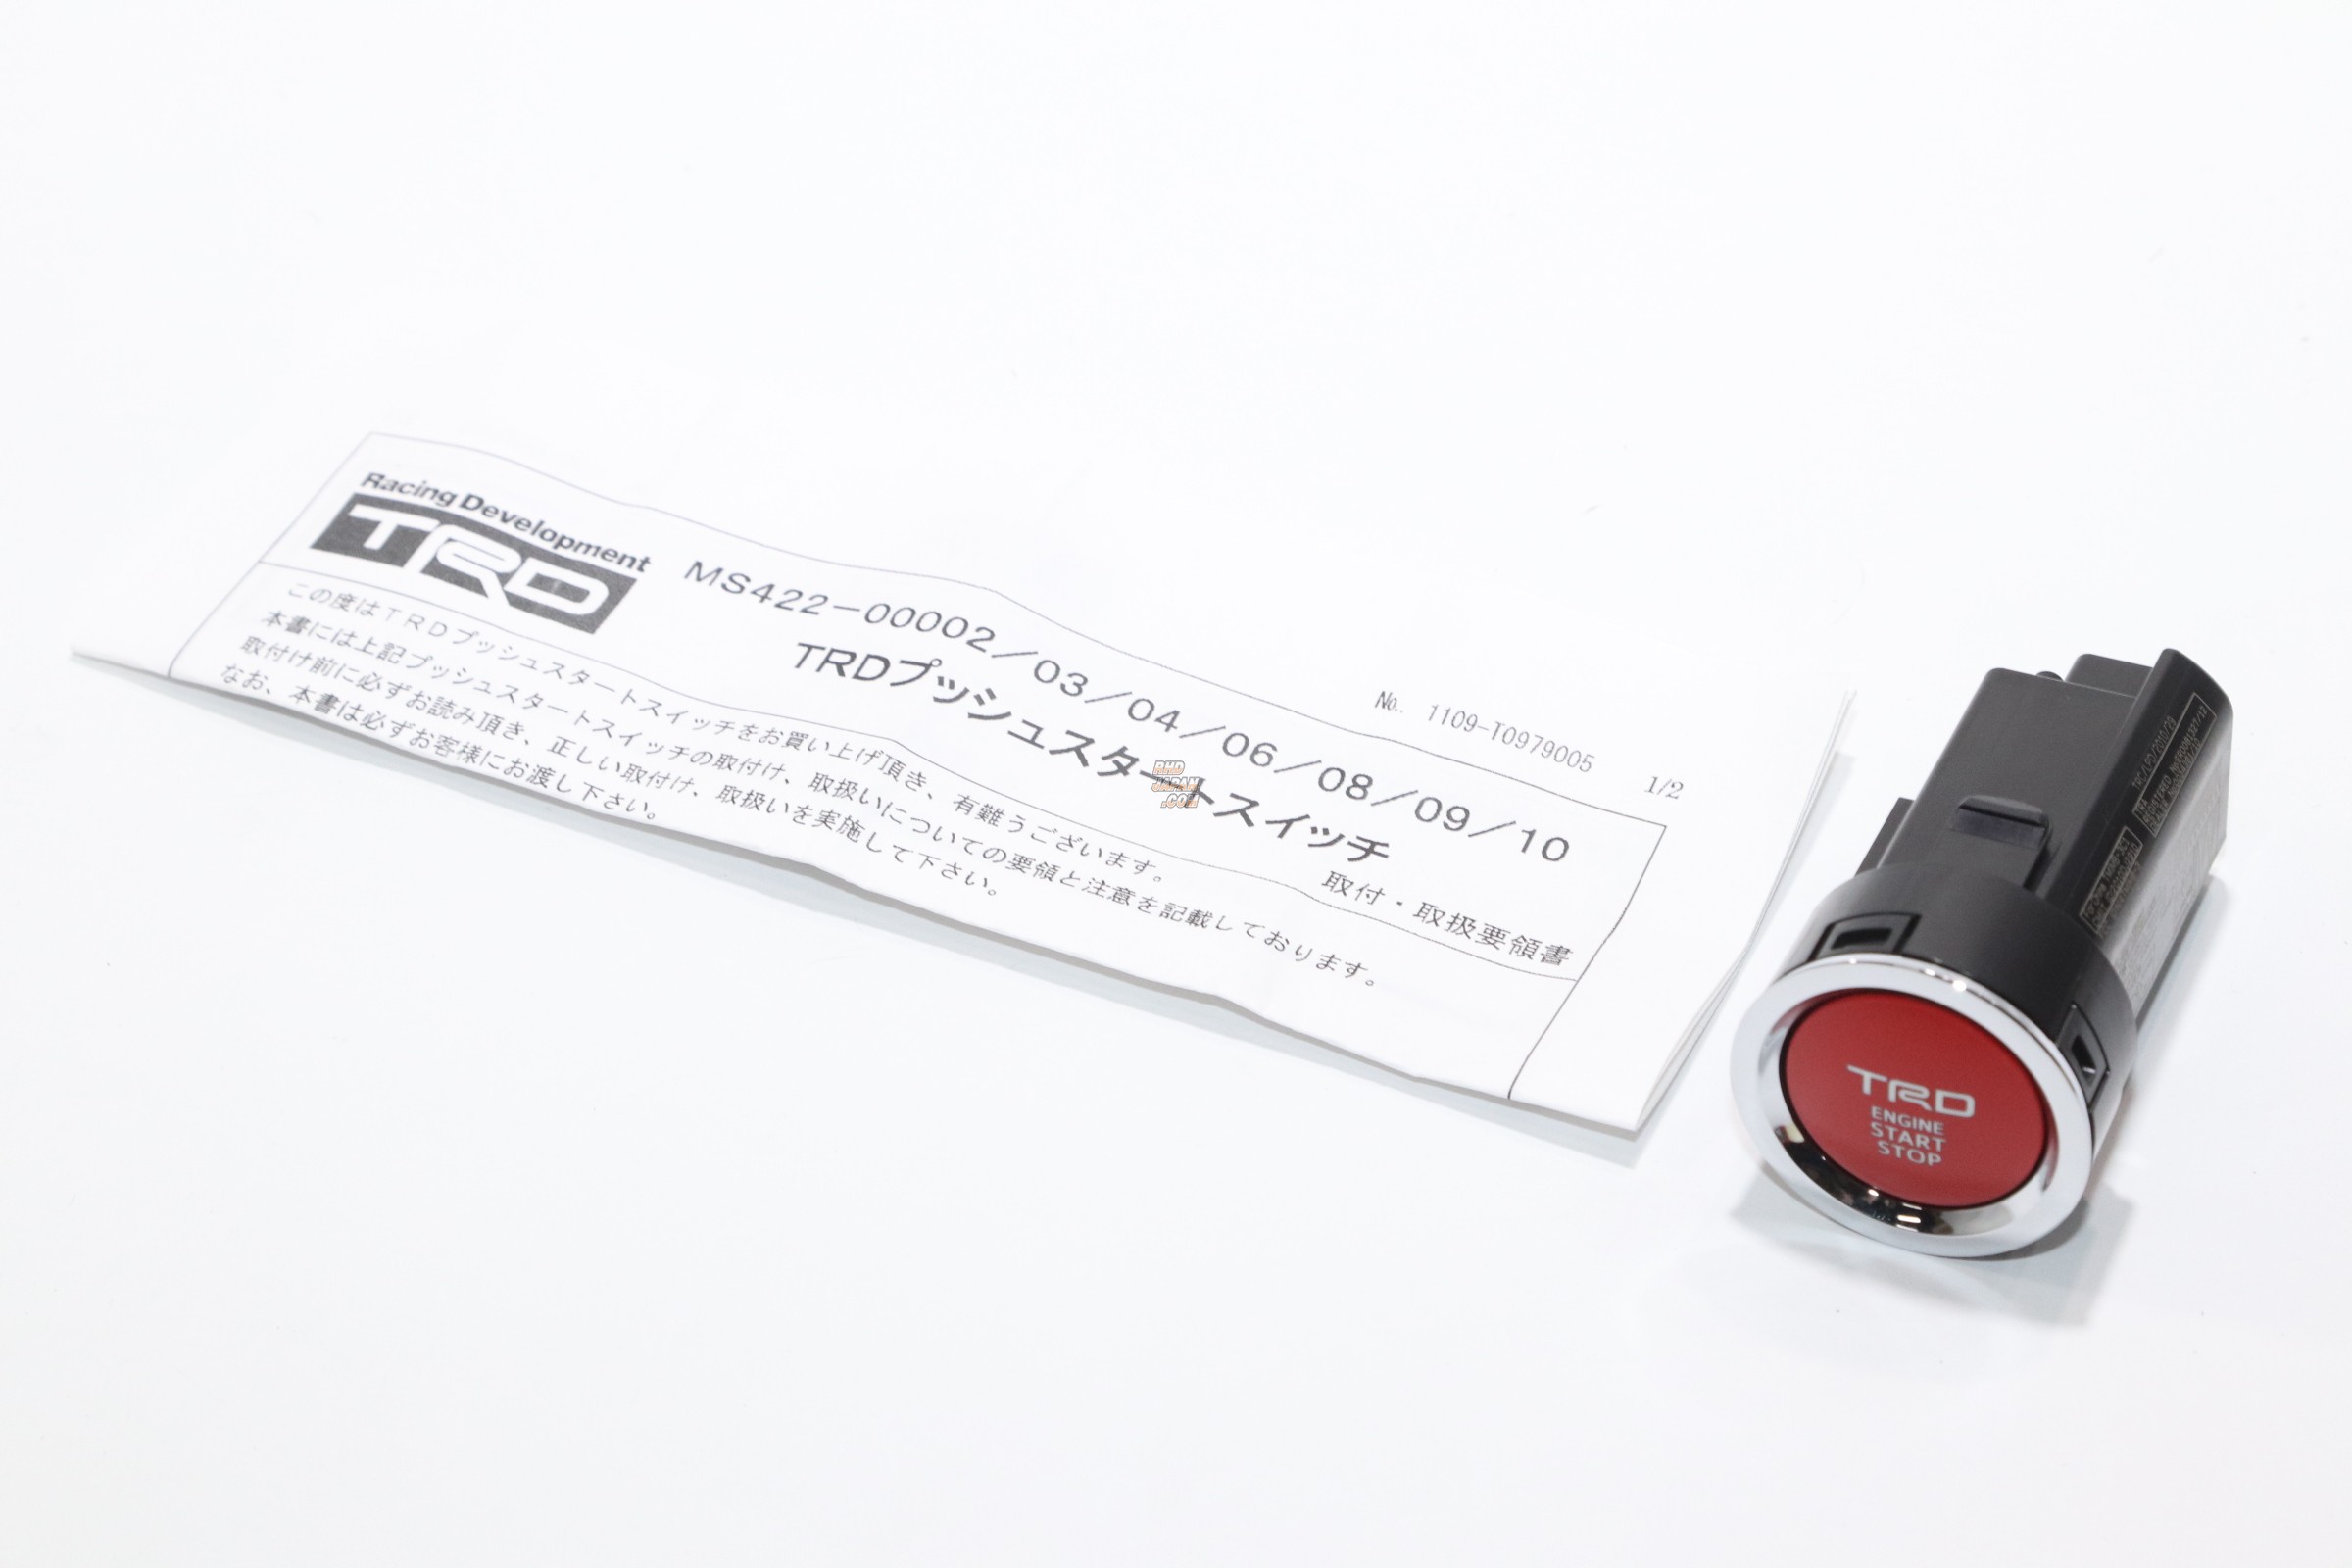 TRD Push Starter Button MS42200003 RHDJapan